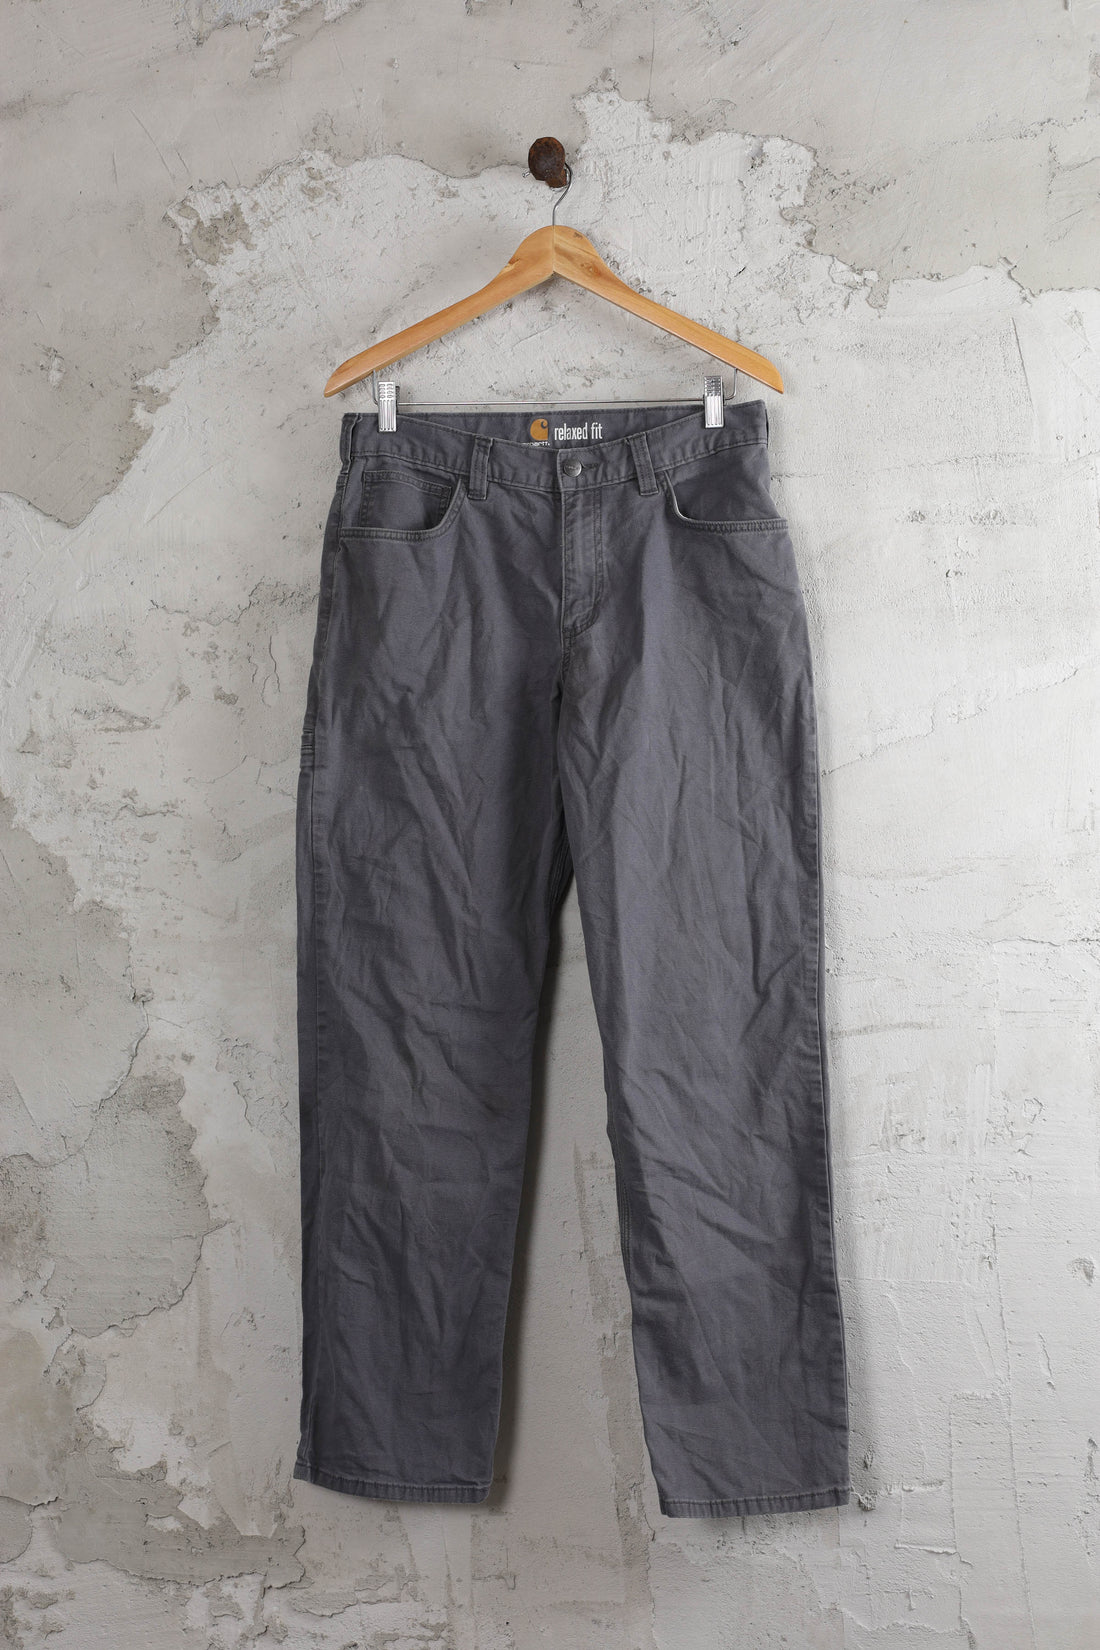 Carhartt Pants Men's 32x28 Grey Carpenter Workwear Relaxed Fit – Proper  Vintage